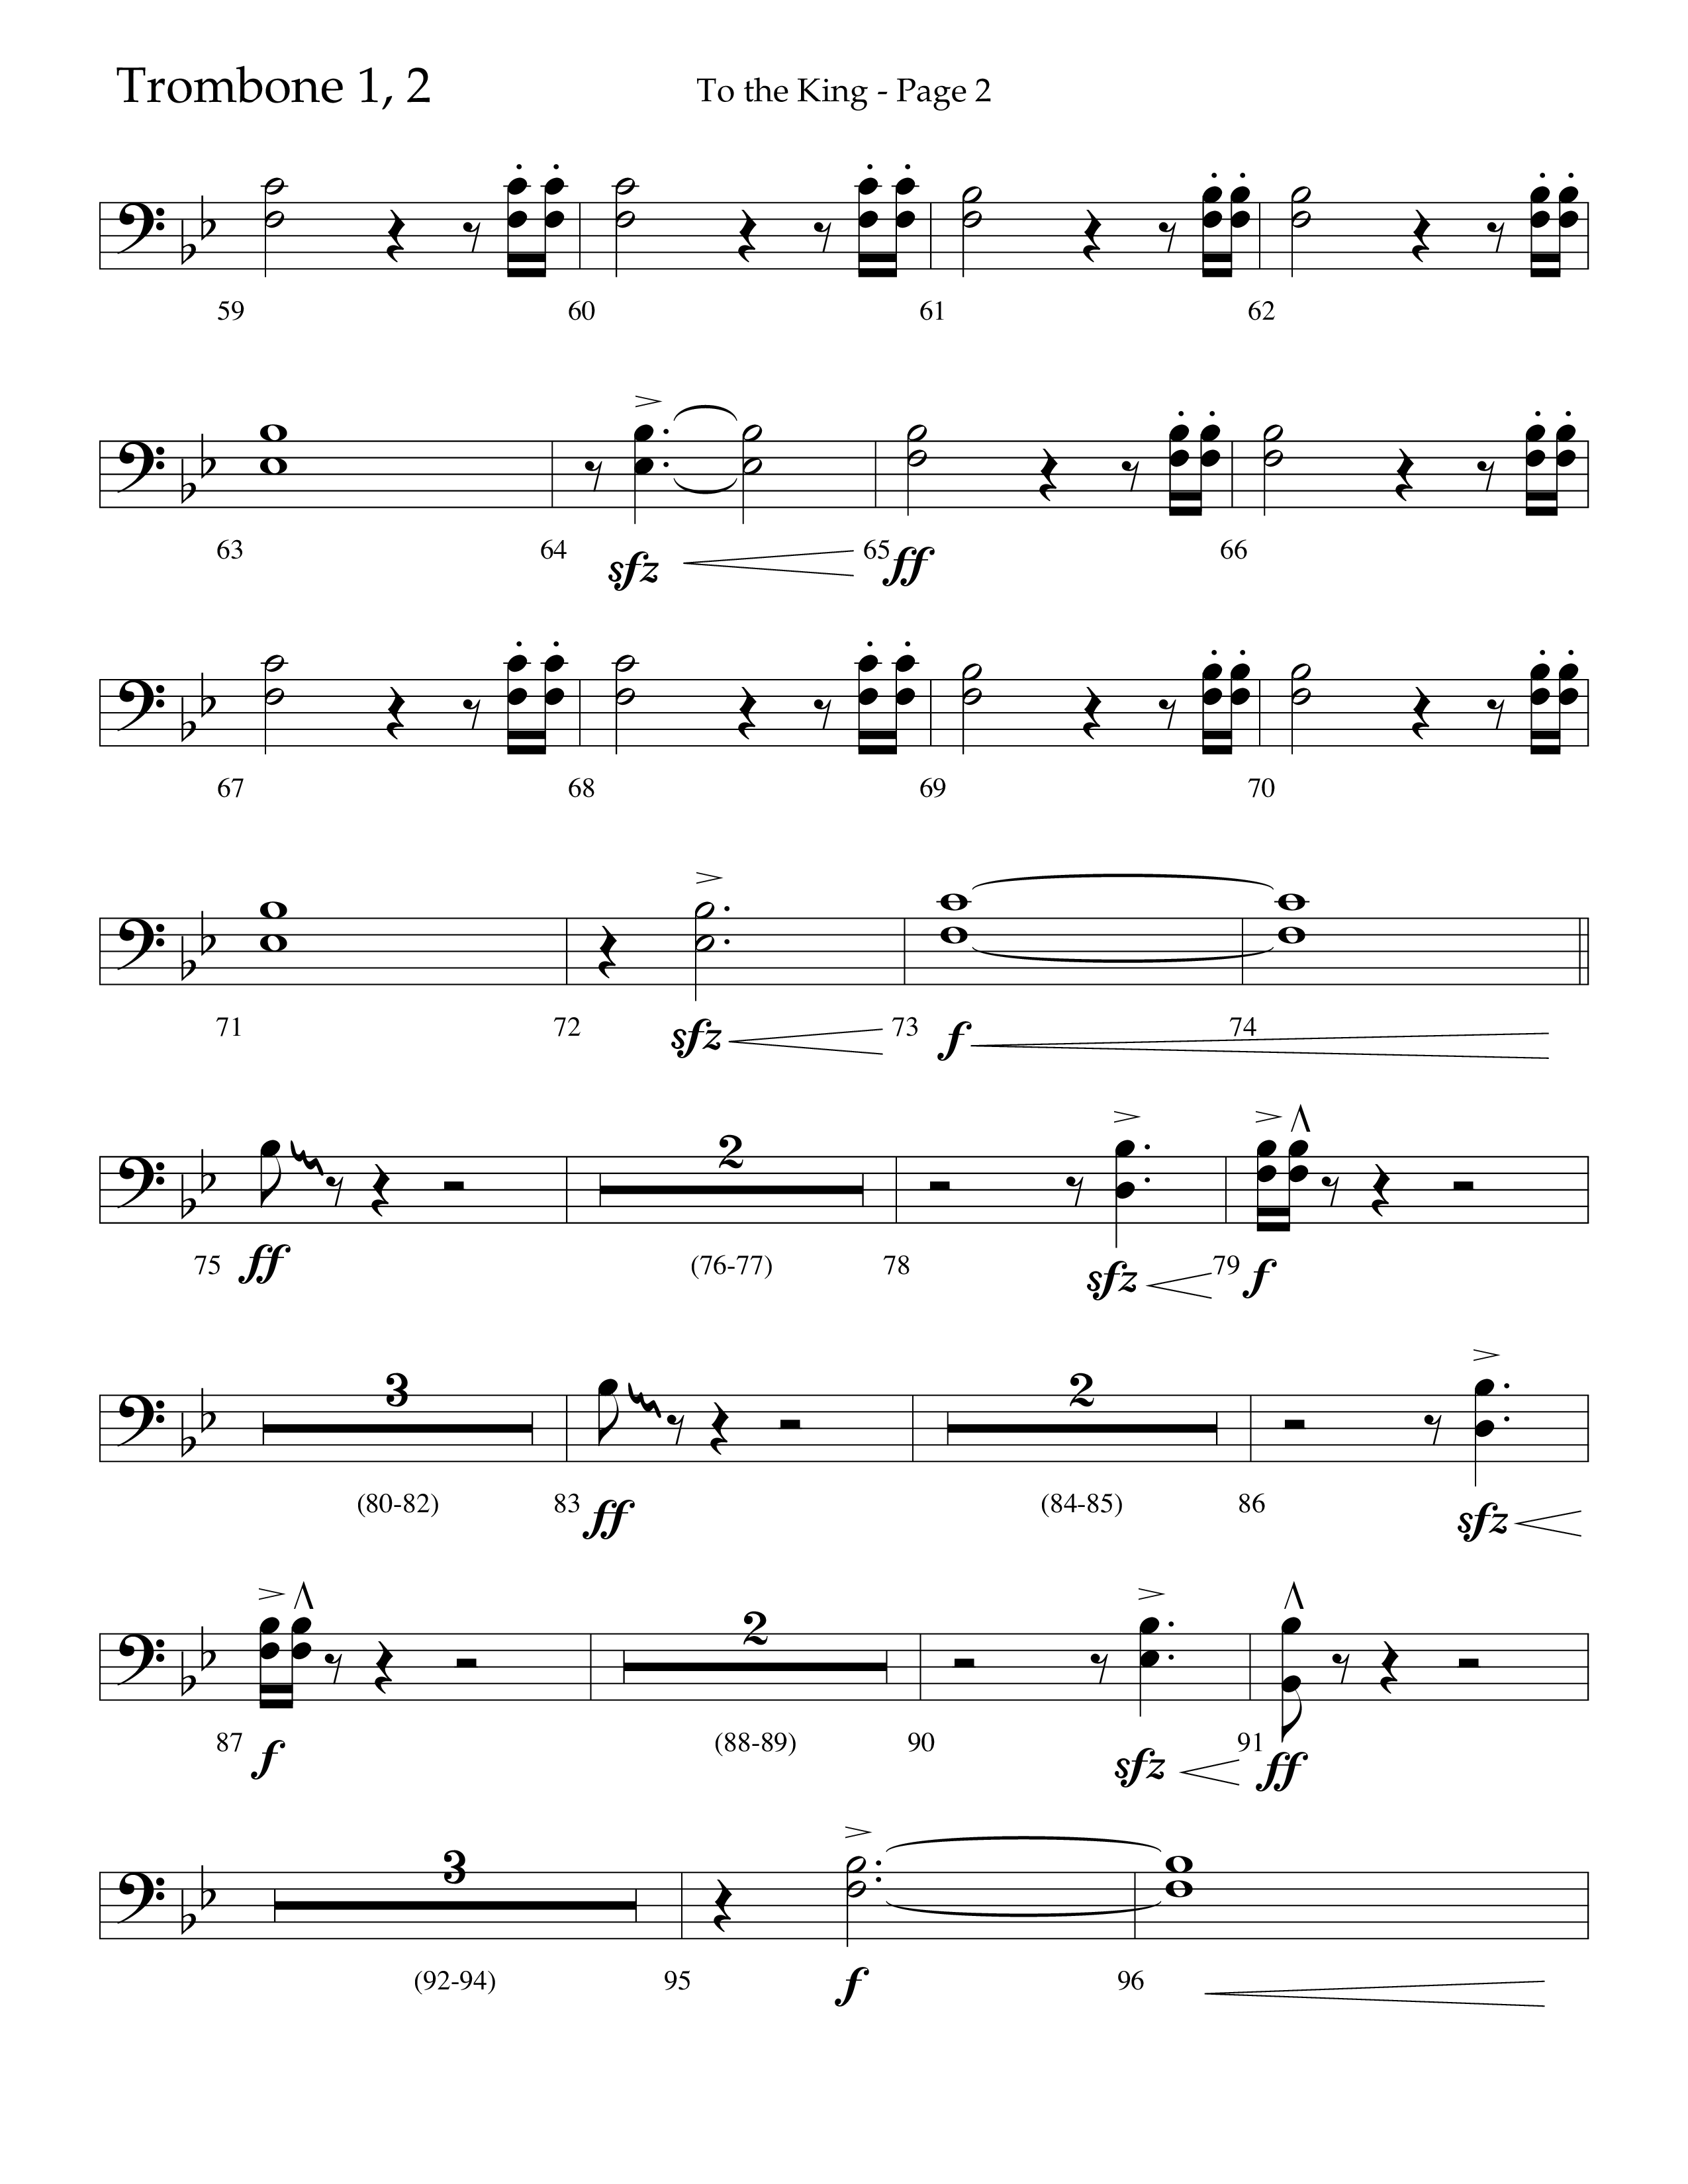 To The King (Choral Anthem SATB) Trombone 1/2 (Lifeway Choral / Arr. Cliff Duren)